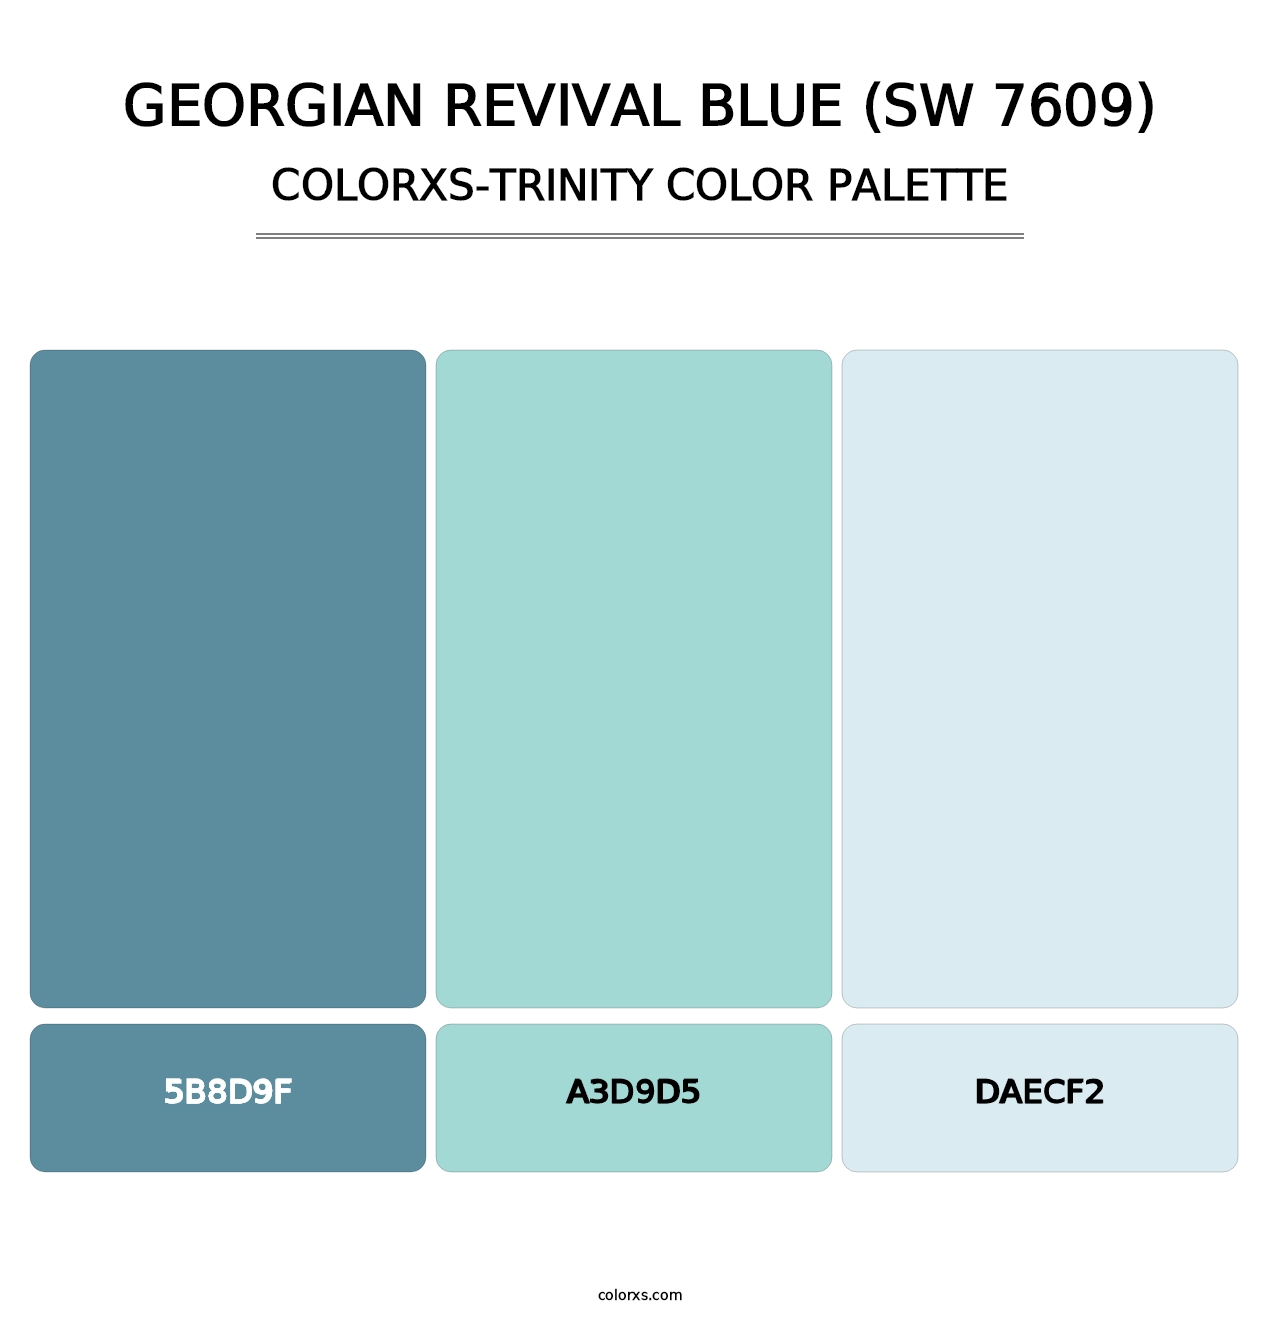 Georgian Revival Blue (SW 7609) - Colorxs Trinity Palette